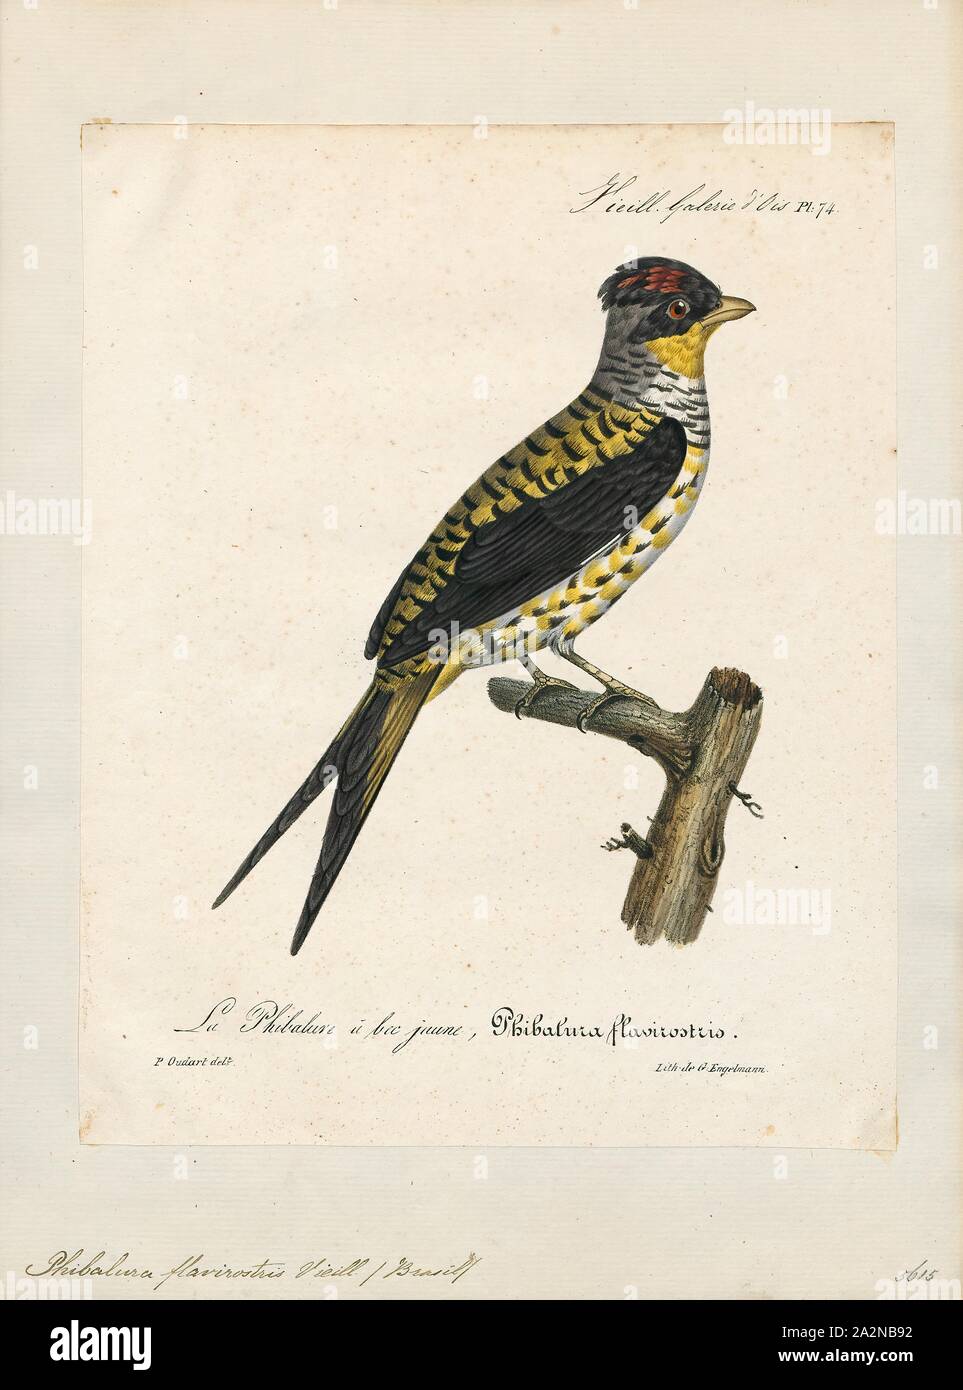 Phibalura flavirostris, Print, The swallow-tailed cotinga (Phibalura flavirostris) is a species of passerine bird in the family Cotingidae. It is the only member of the genus Phibalura., 1825-1834 Stock Photo